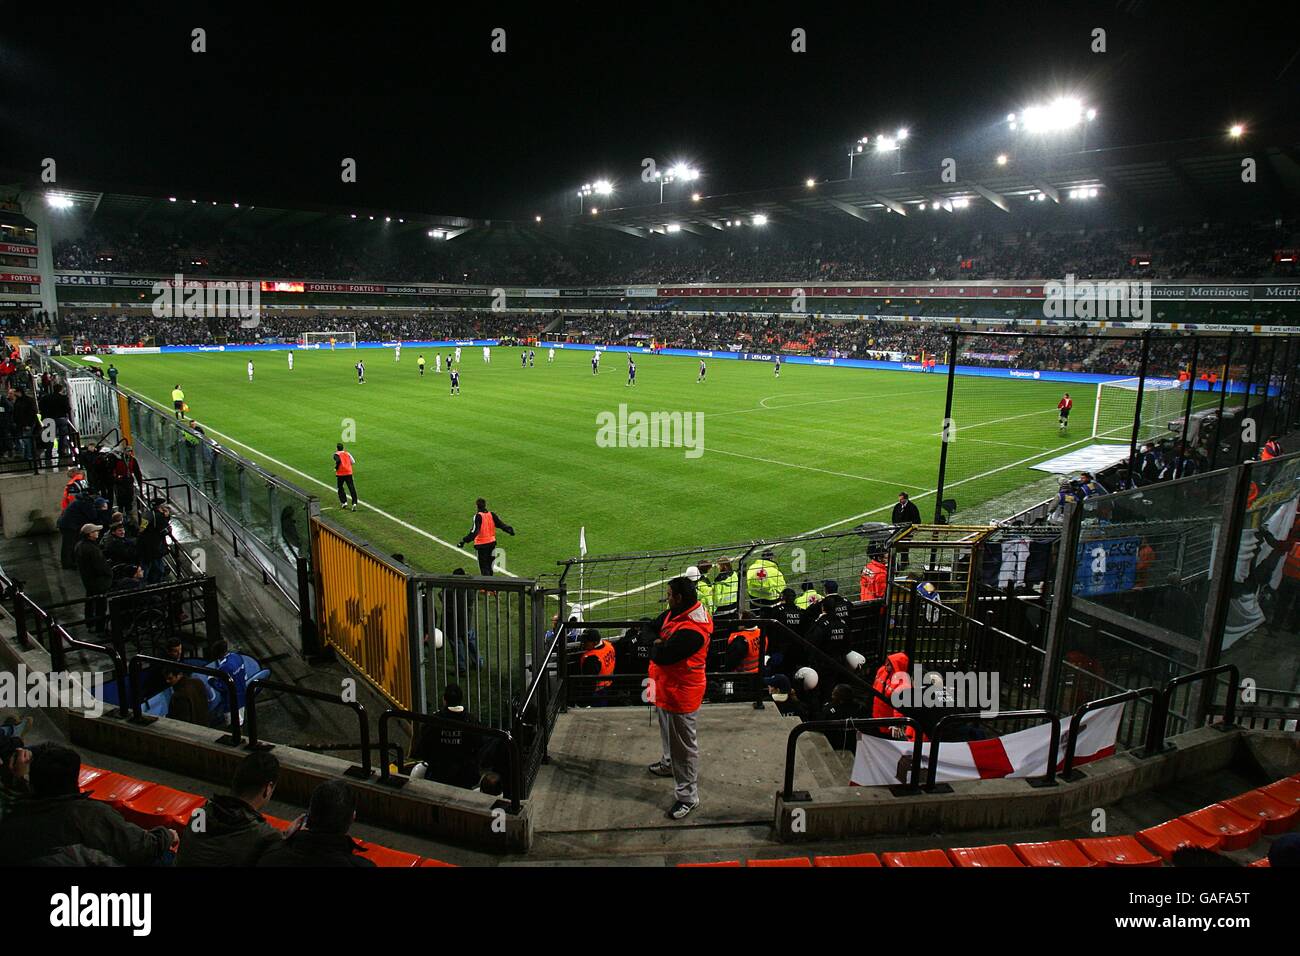 Football - Coupe de l'UEFA - Groupe G - Anderlecht v Tottenham Hotspur - Constant Vanden Stockstadion Banque D'Images